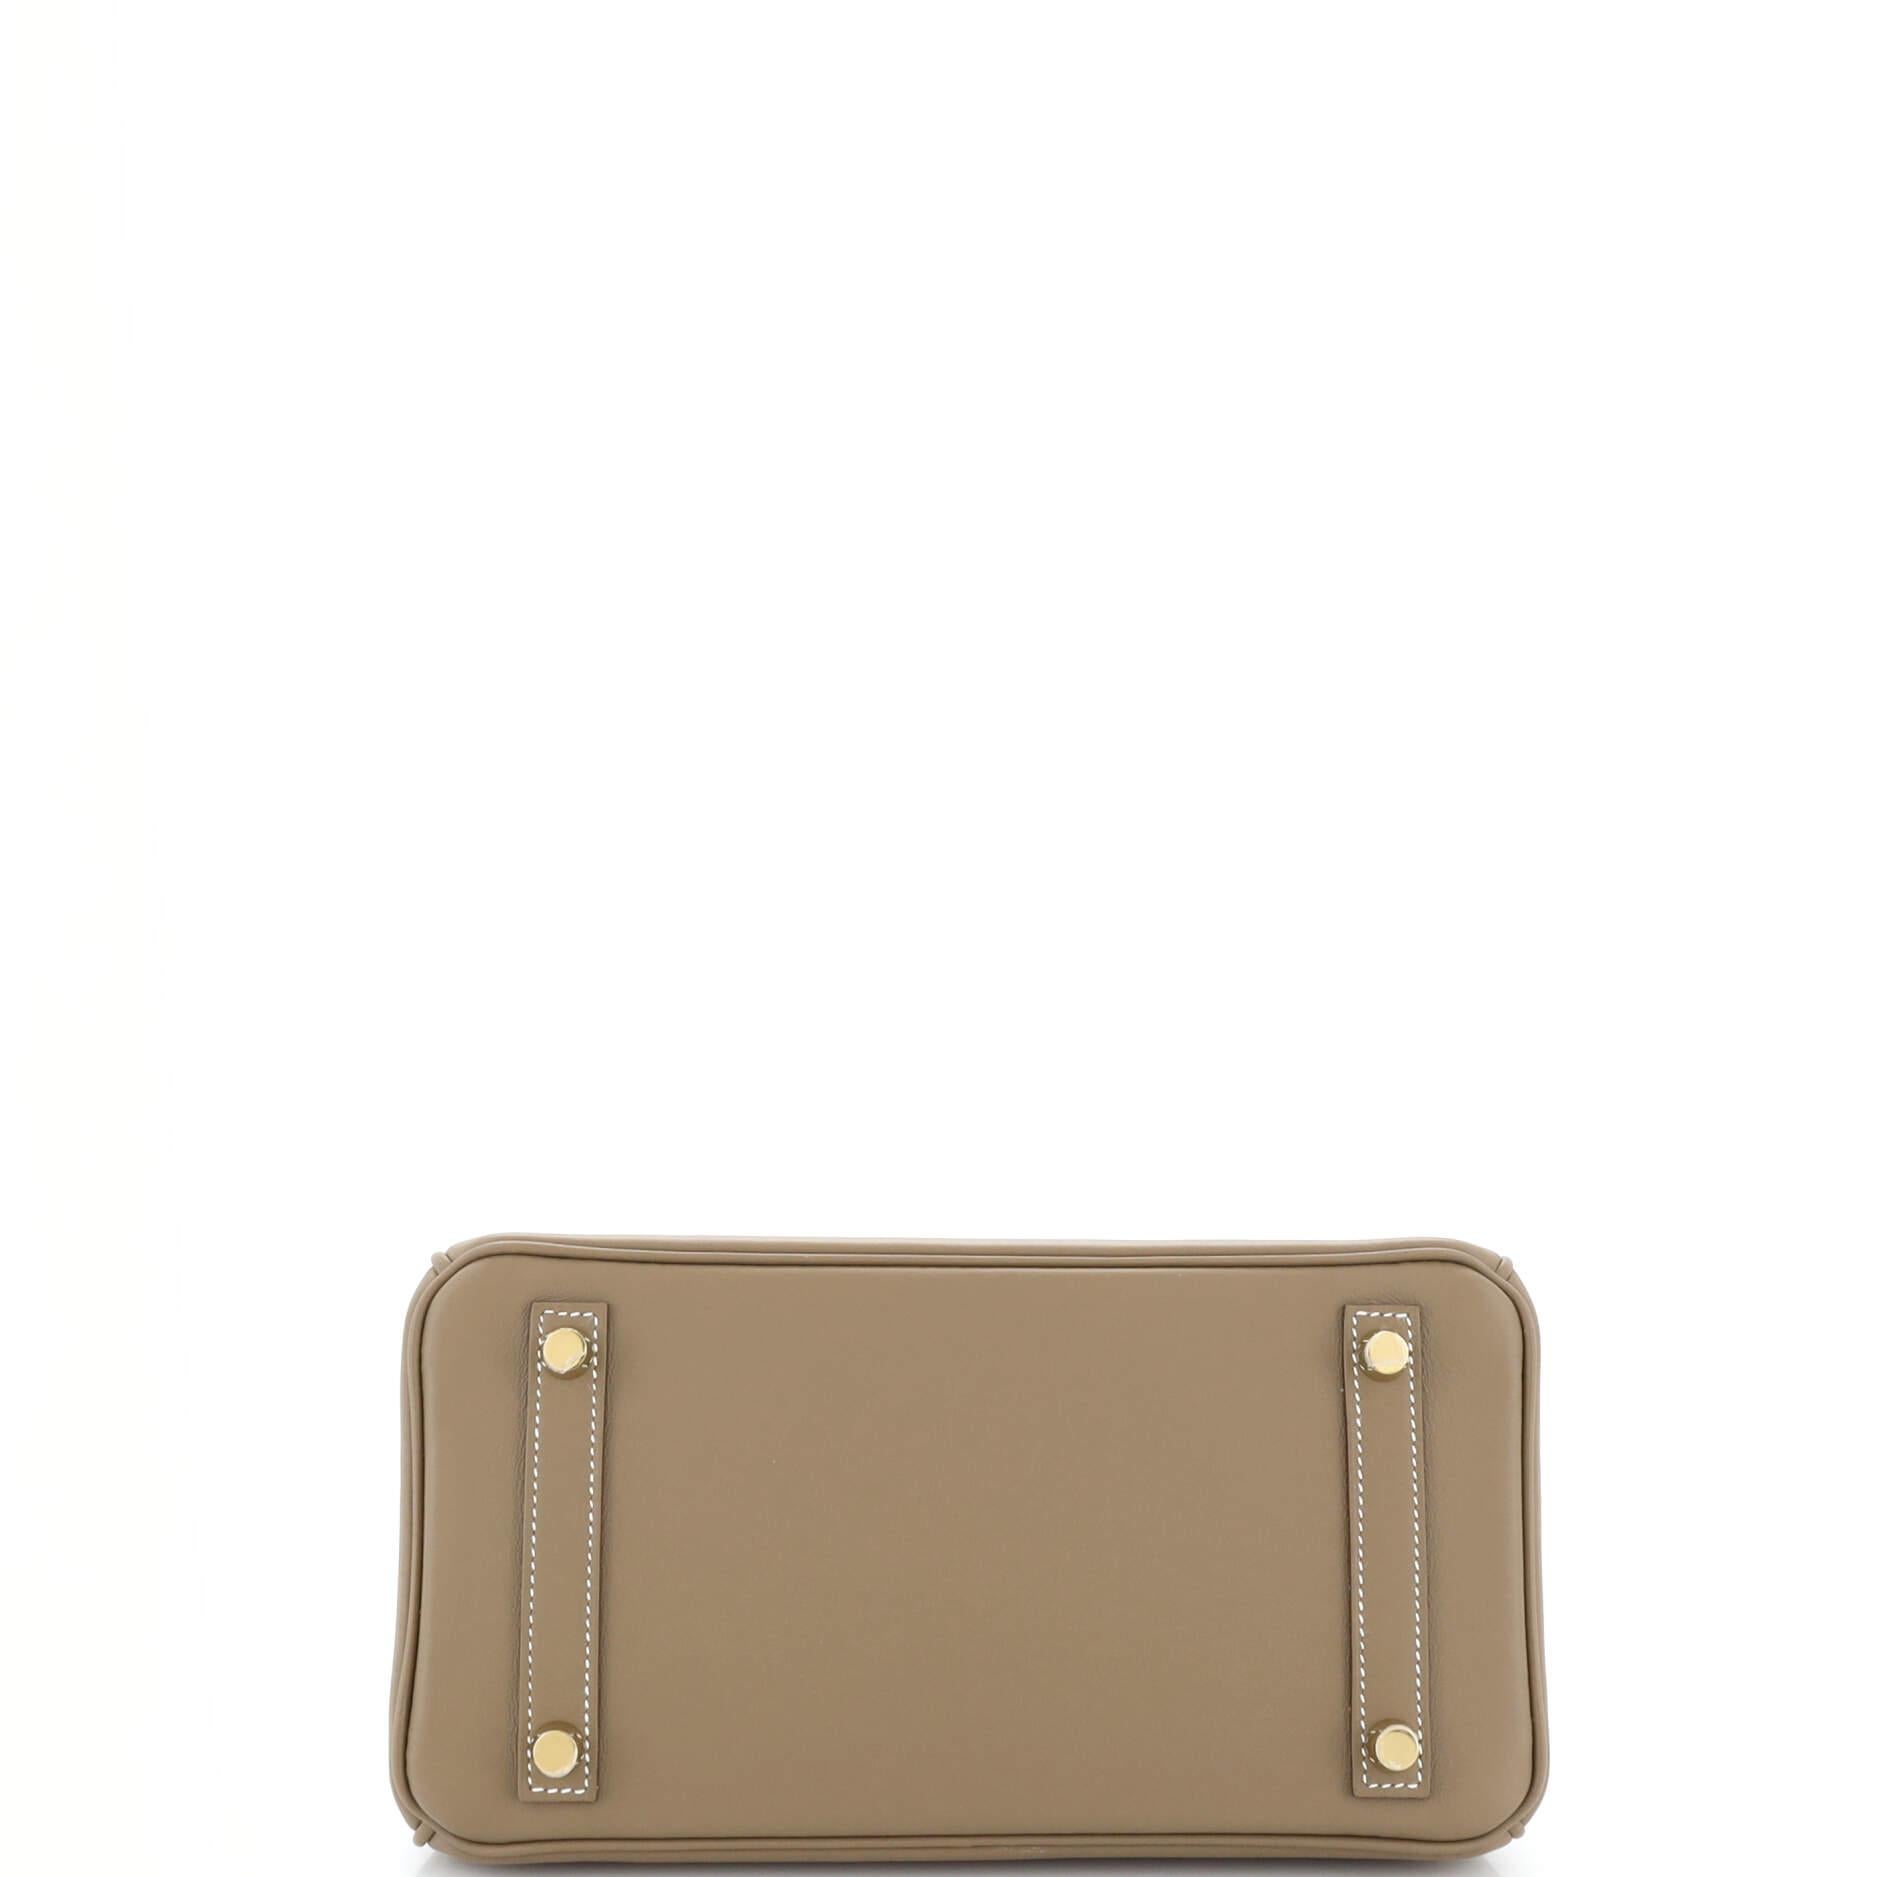 Hermes Birkin Handbag Grey Swift with Gold Hardware 25 1